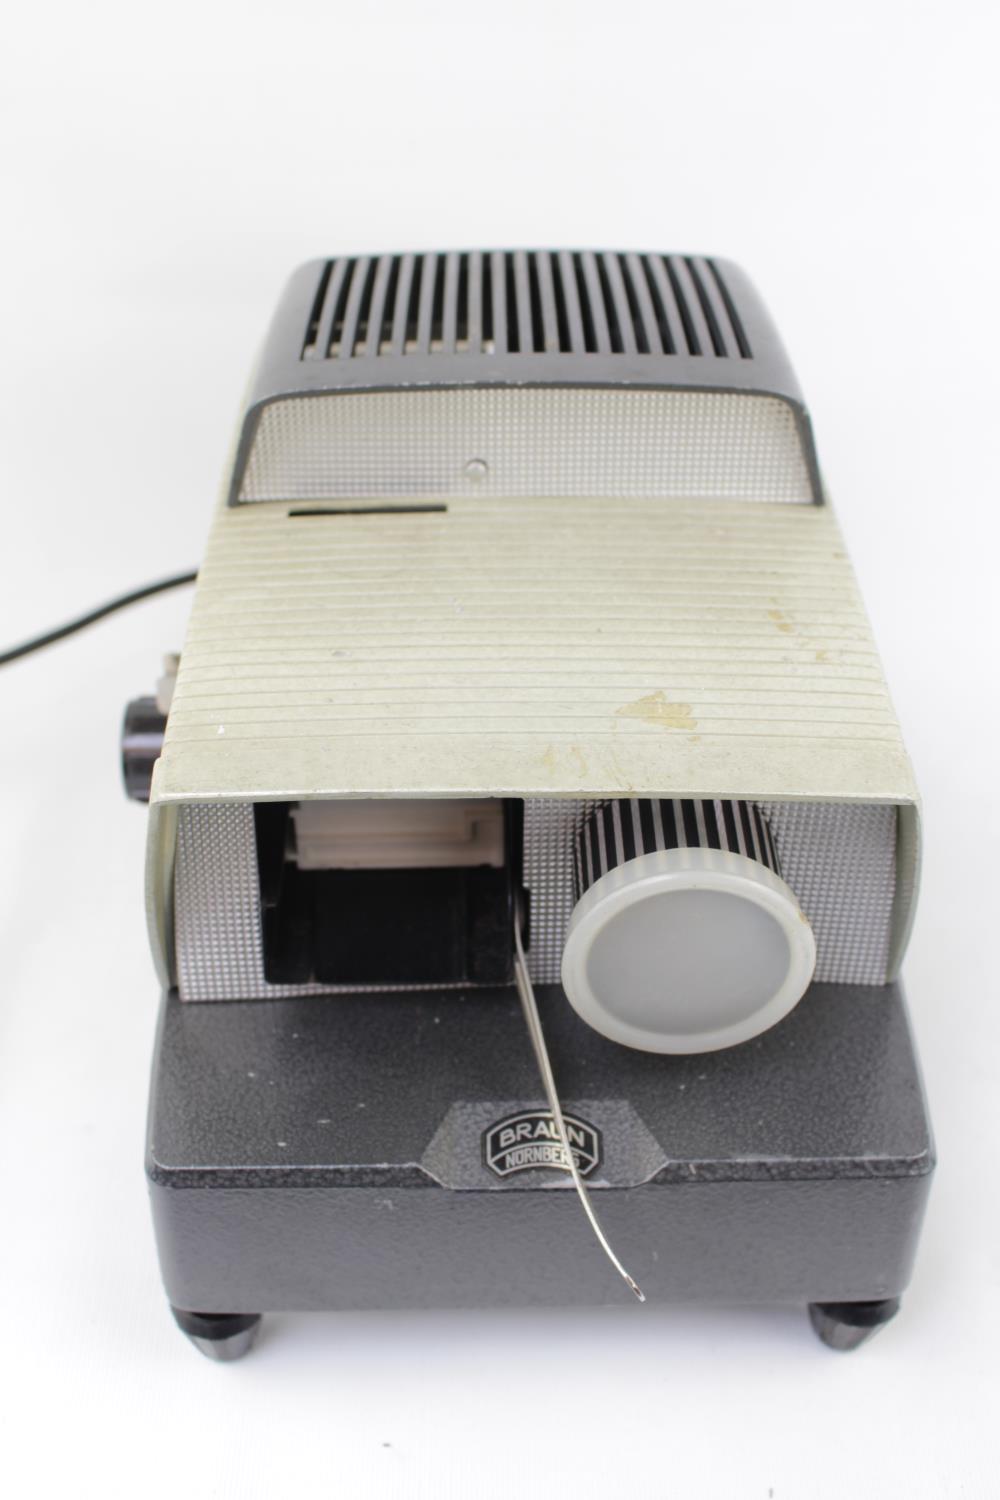 Braun Nurnberg cased projector - Image 2 of 2